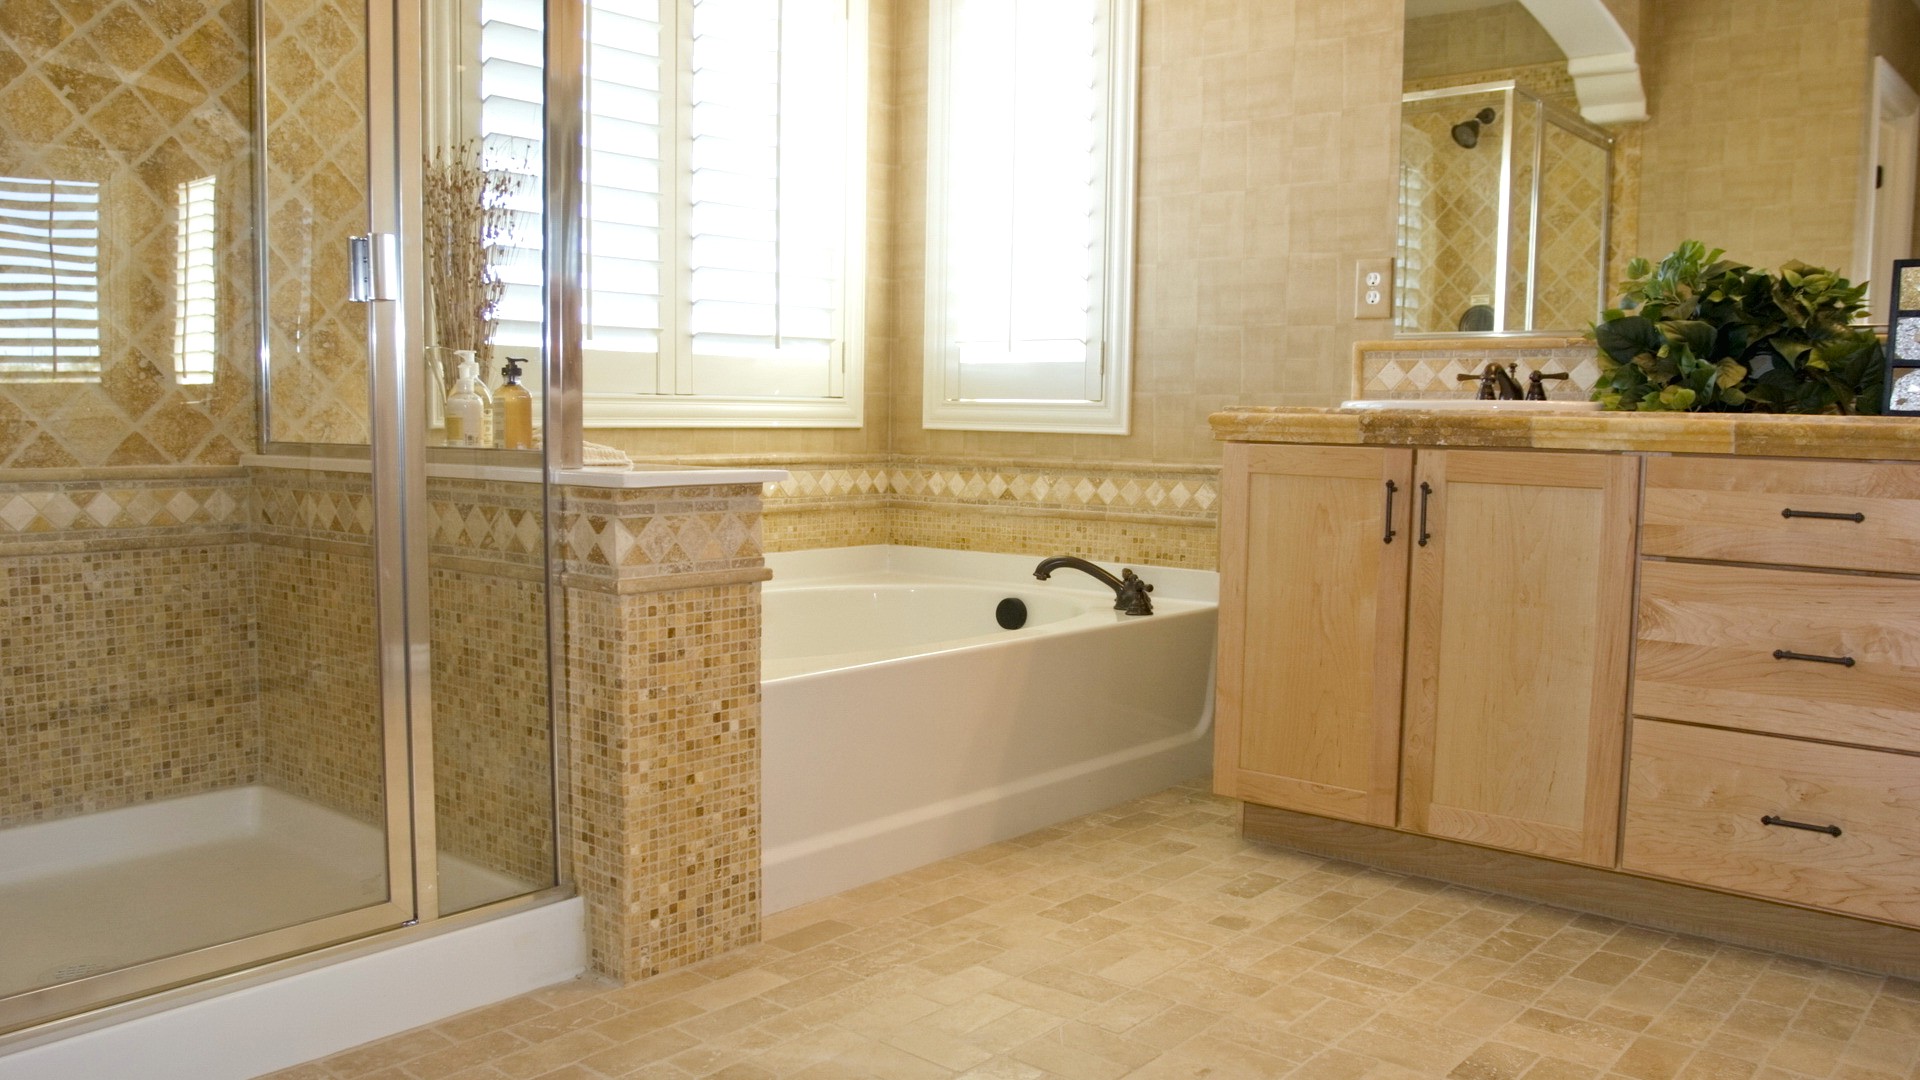 picture: bathroom, beautiful, room, interior, style, design (image)